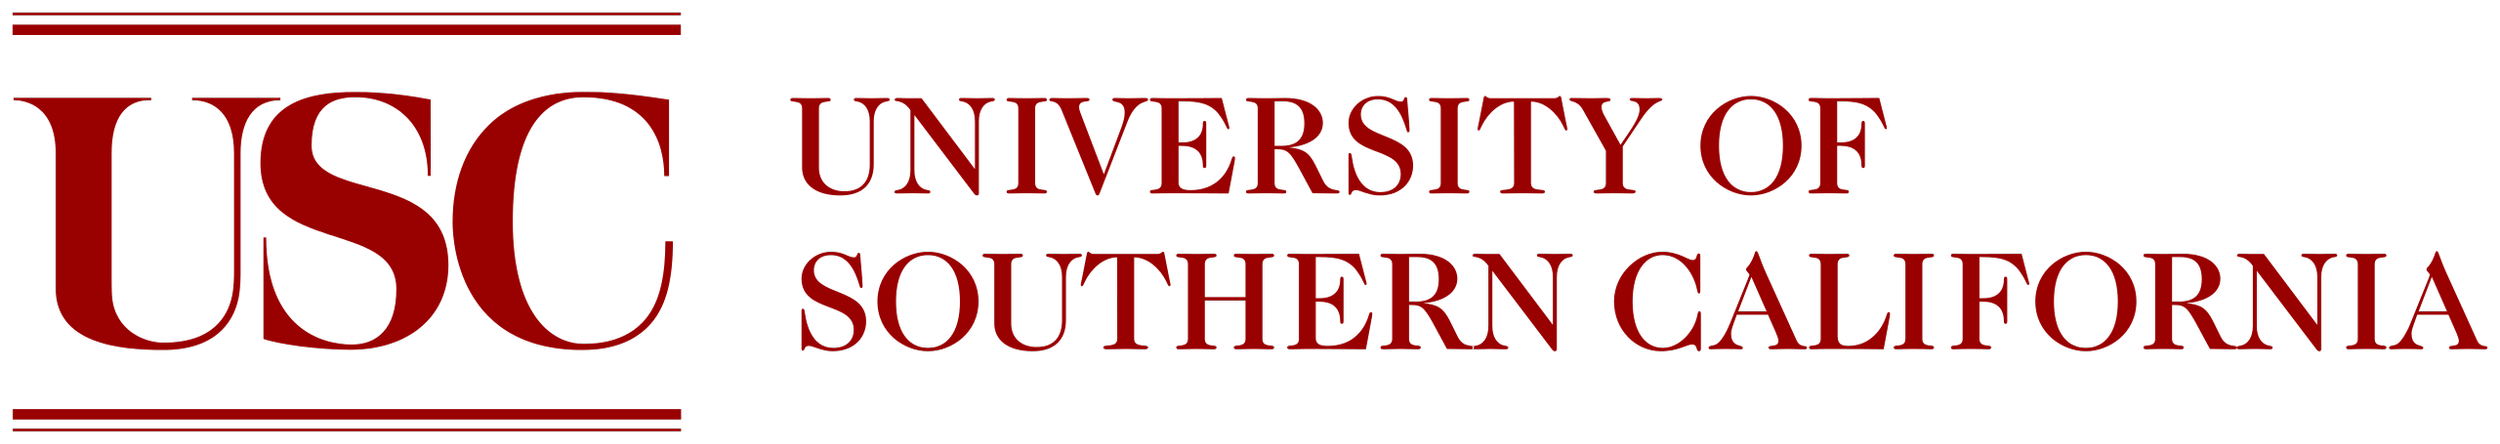 University_of_Southern_California_logo.svg.png